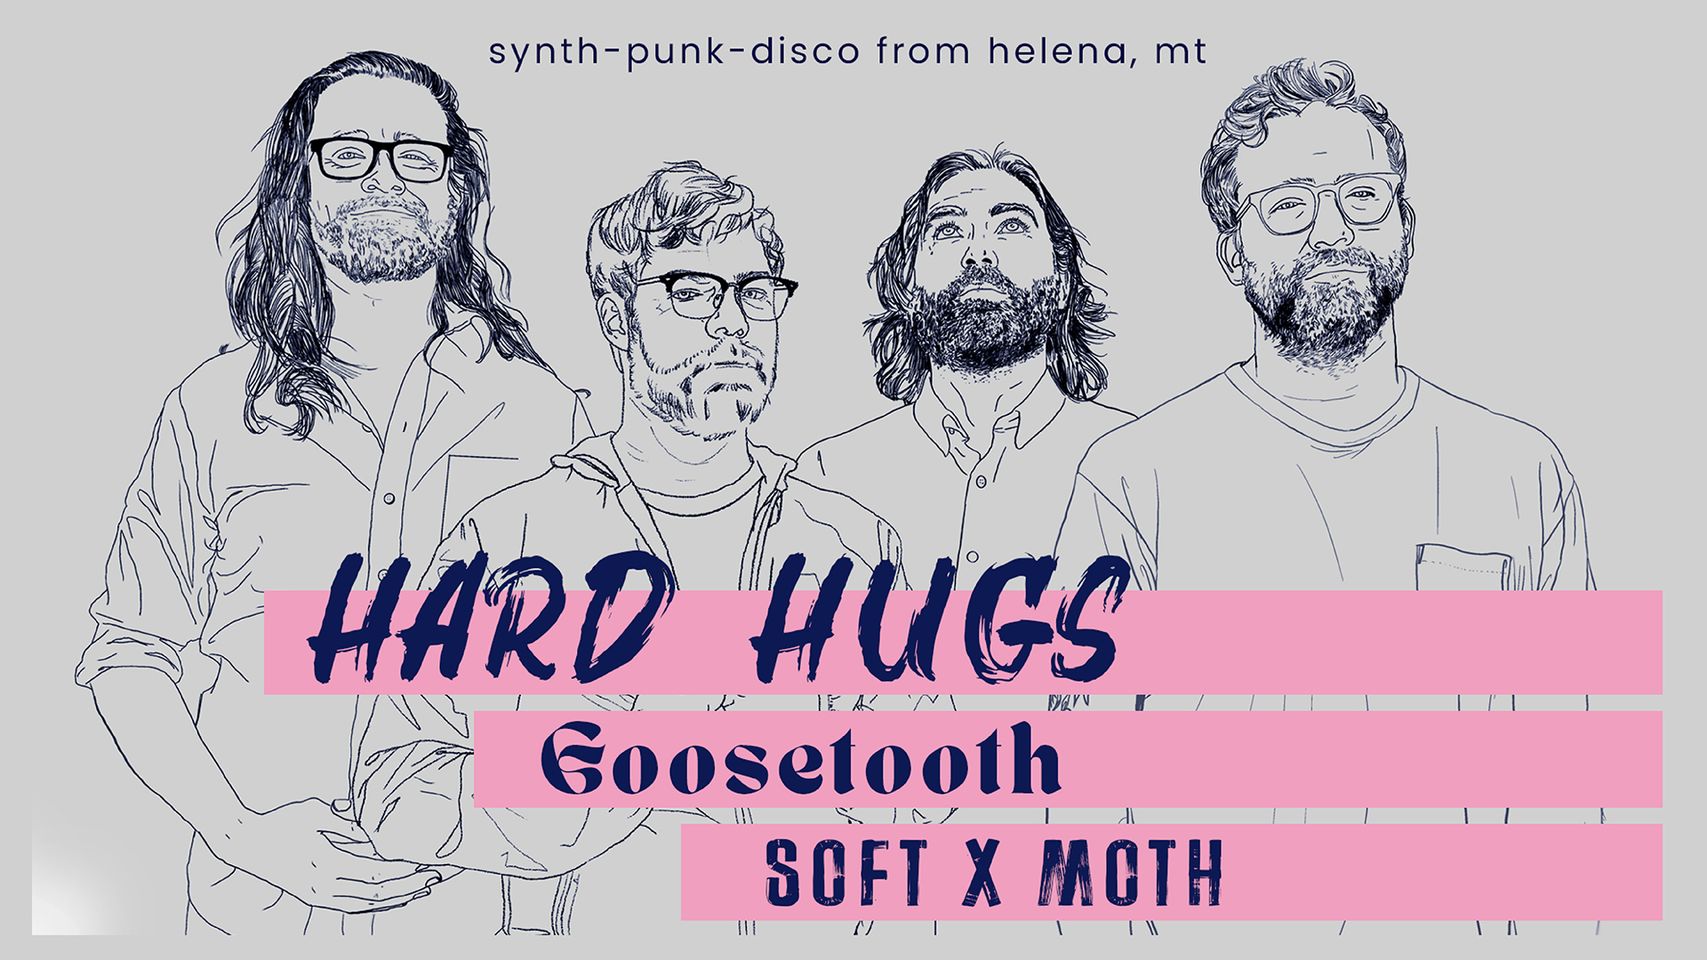 Hard Hugs, Goosetooth and Soft X Moth on Sunday, October 23 at Zootown Arts Community Center 